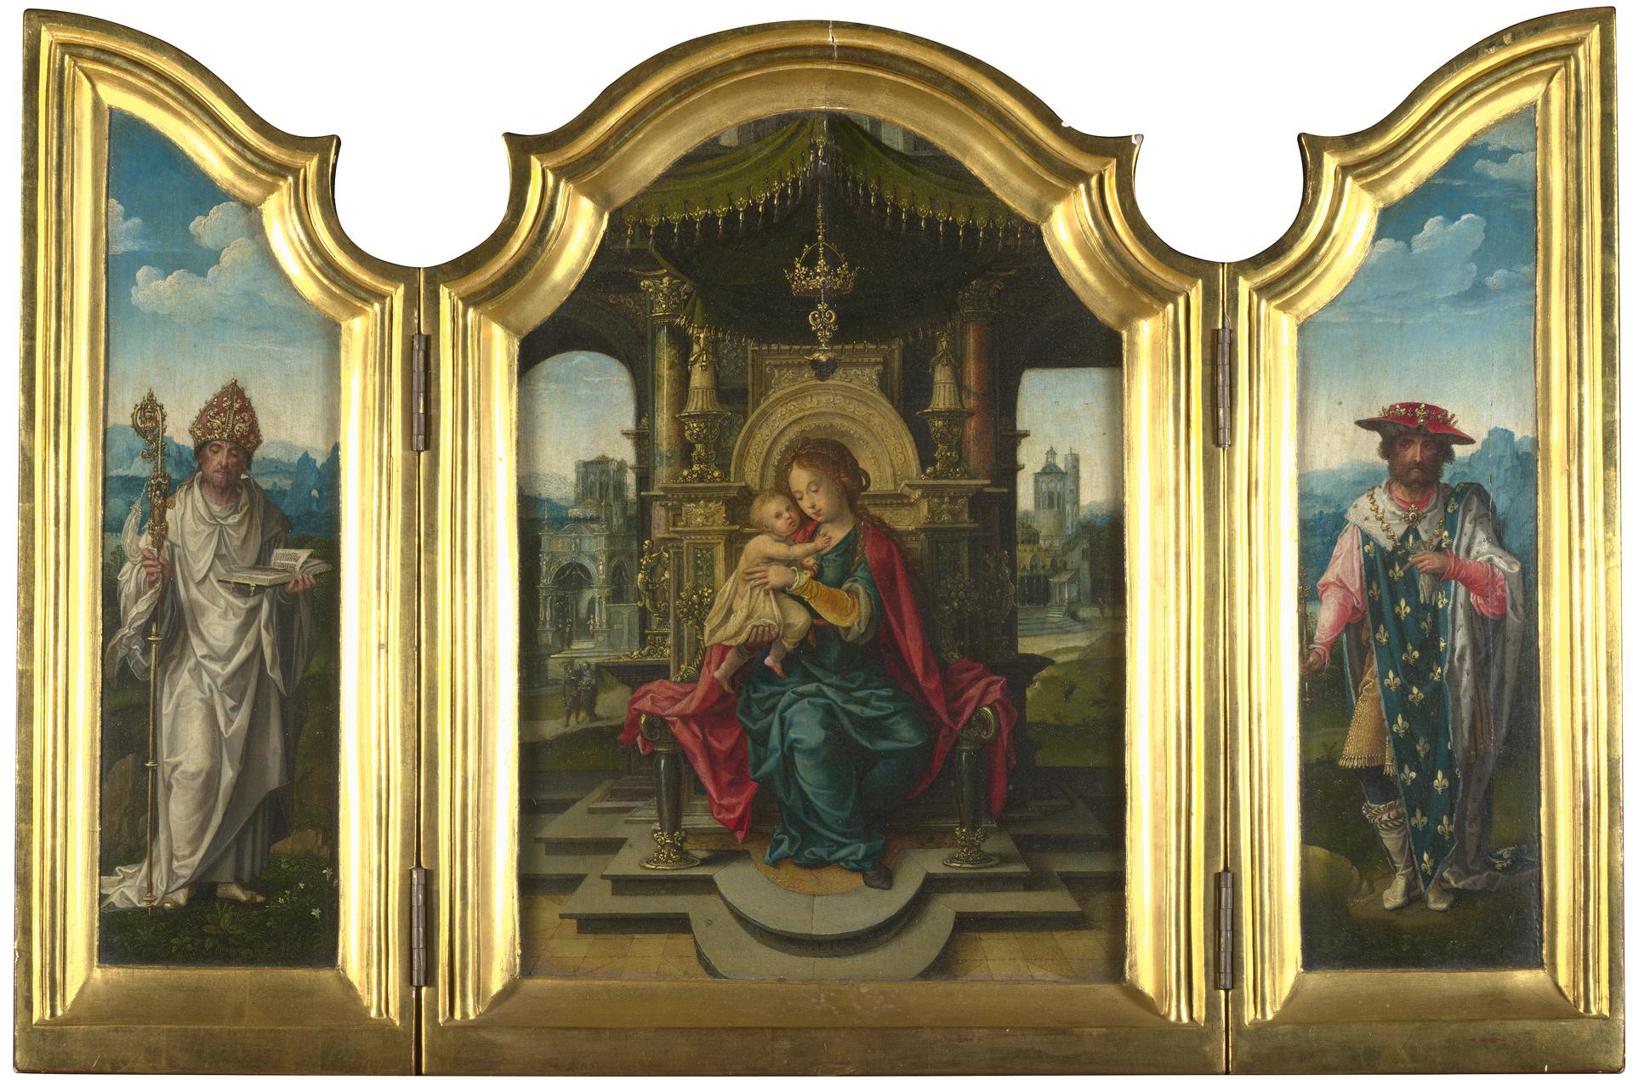 The Virgin and Child Enthroned by Workshop of Pieter Coecke van Aalst